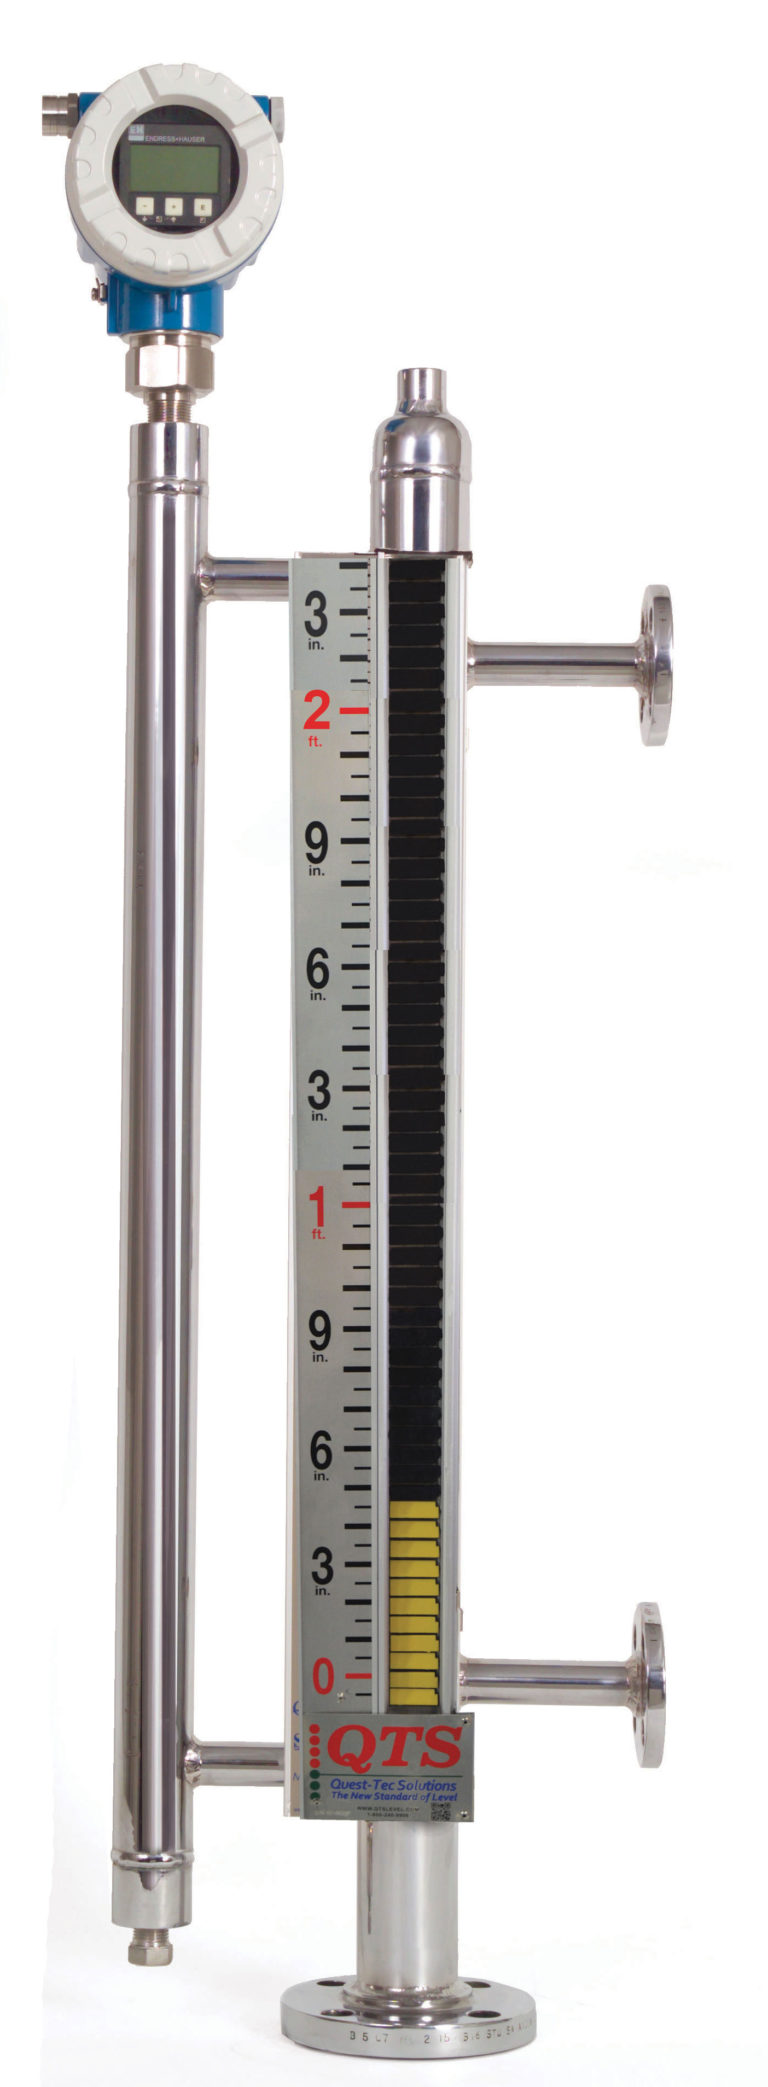 Magne-Trac Level Measurement